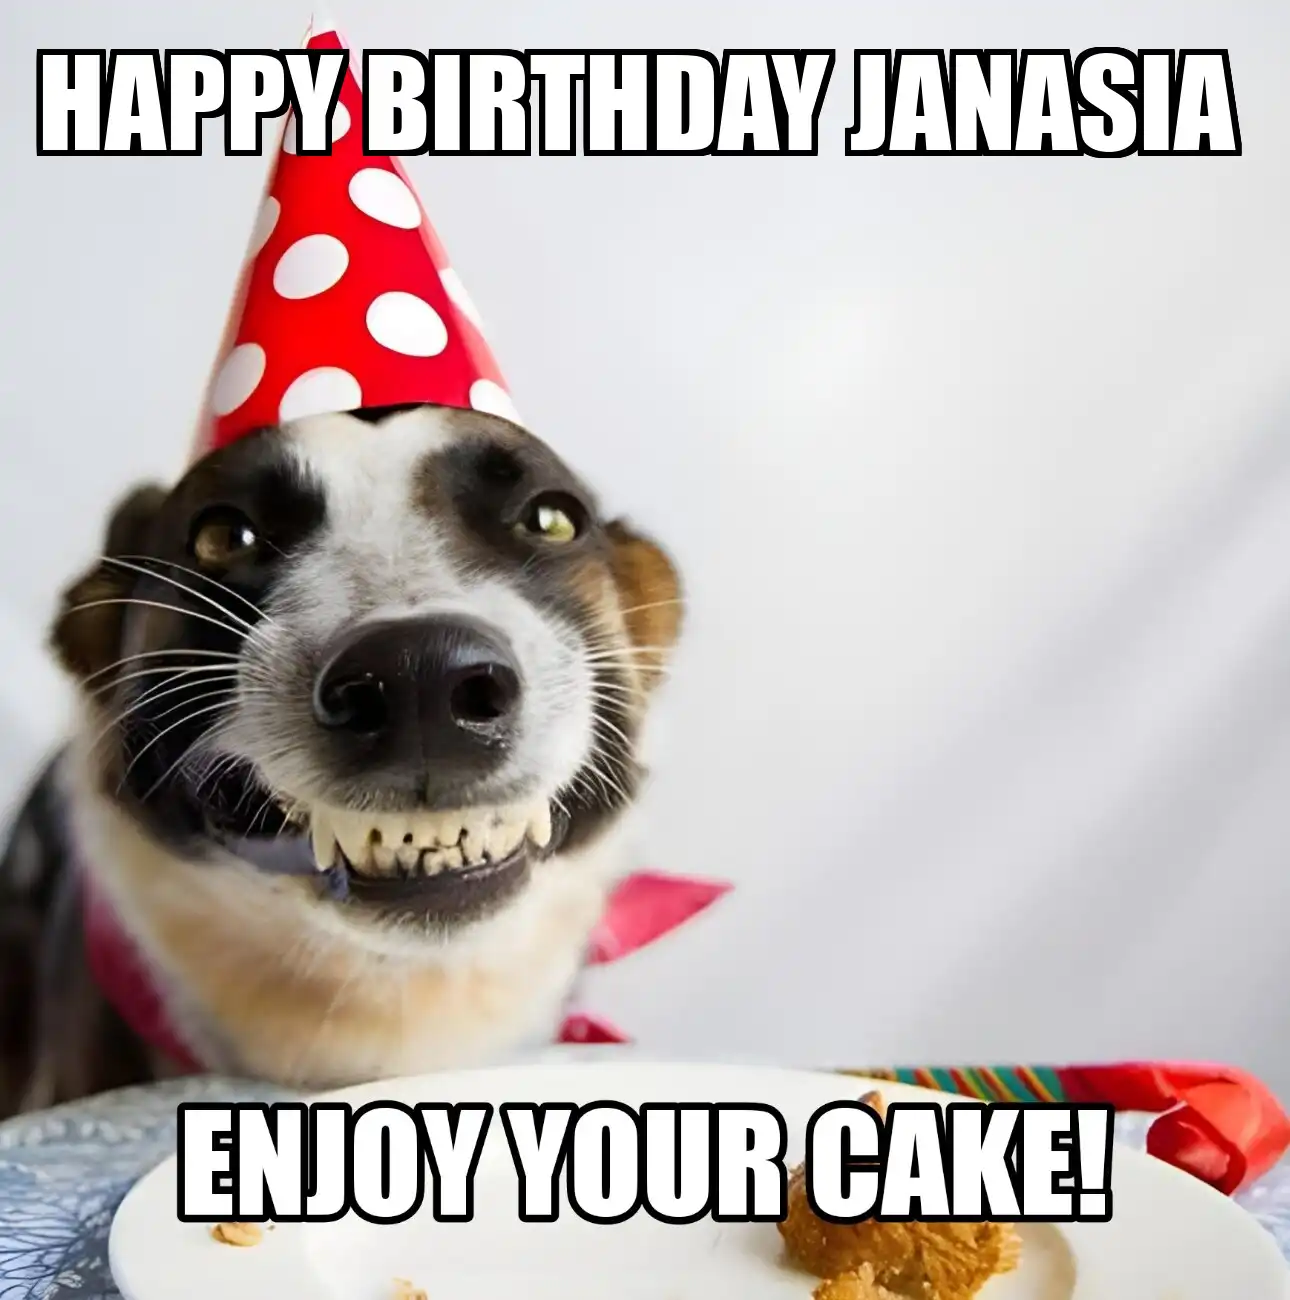 Happy Birthday Janasia Enjoy Your Cake Dog Meme